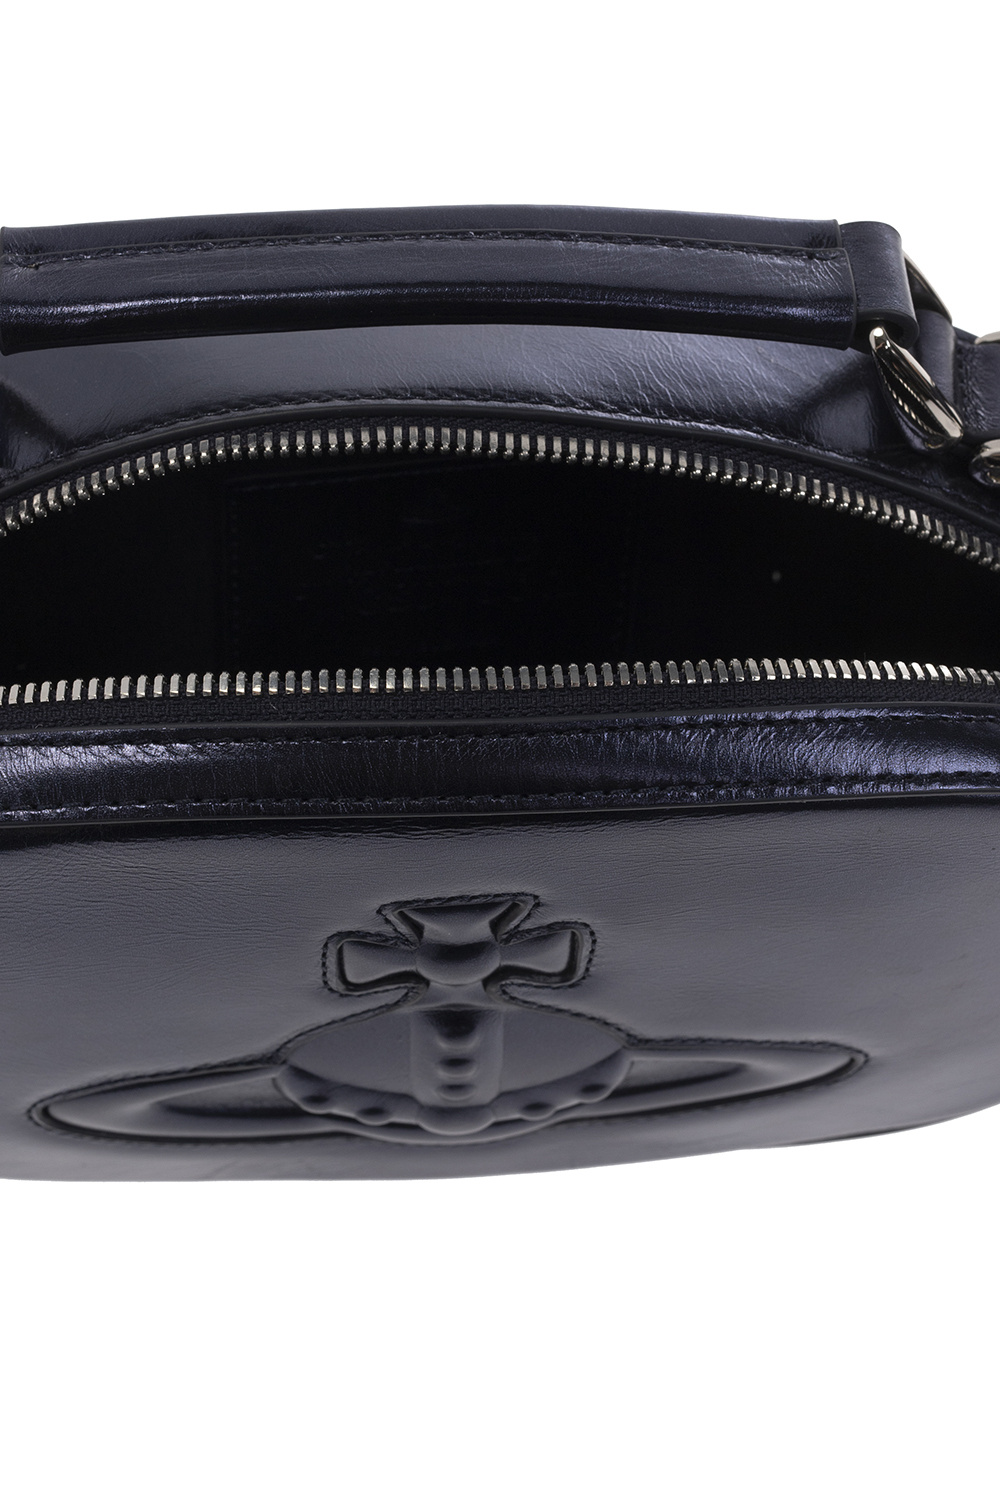 Vivienne Westwood Wallet Black Size -- Bovine Leather